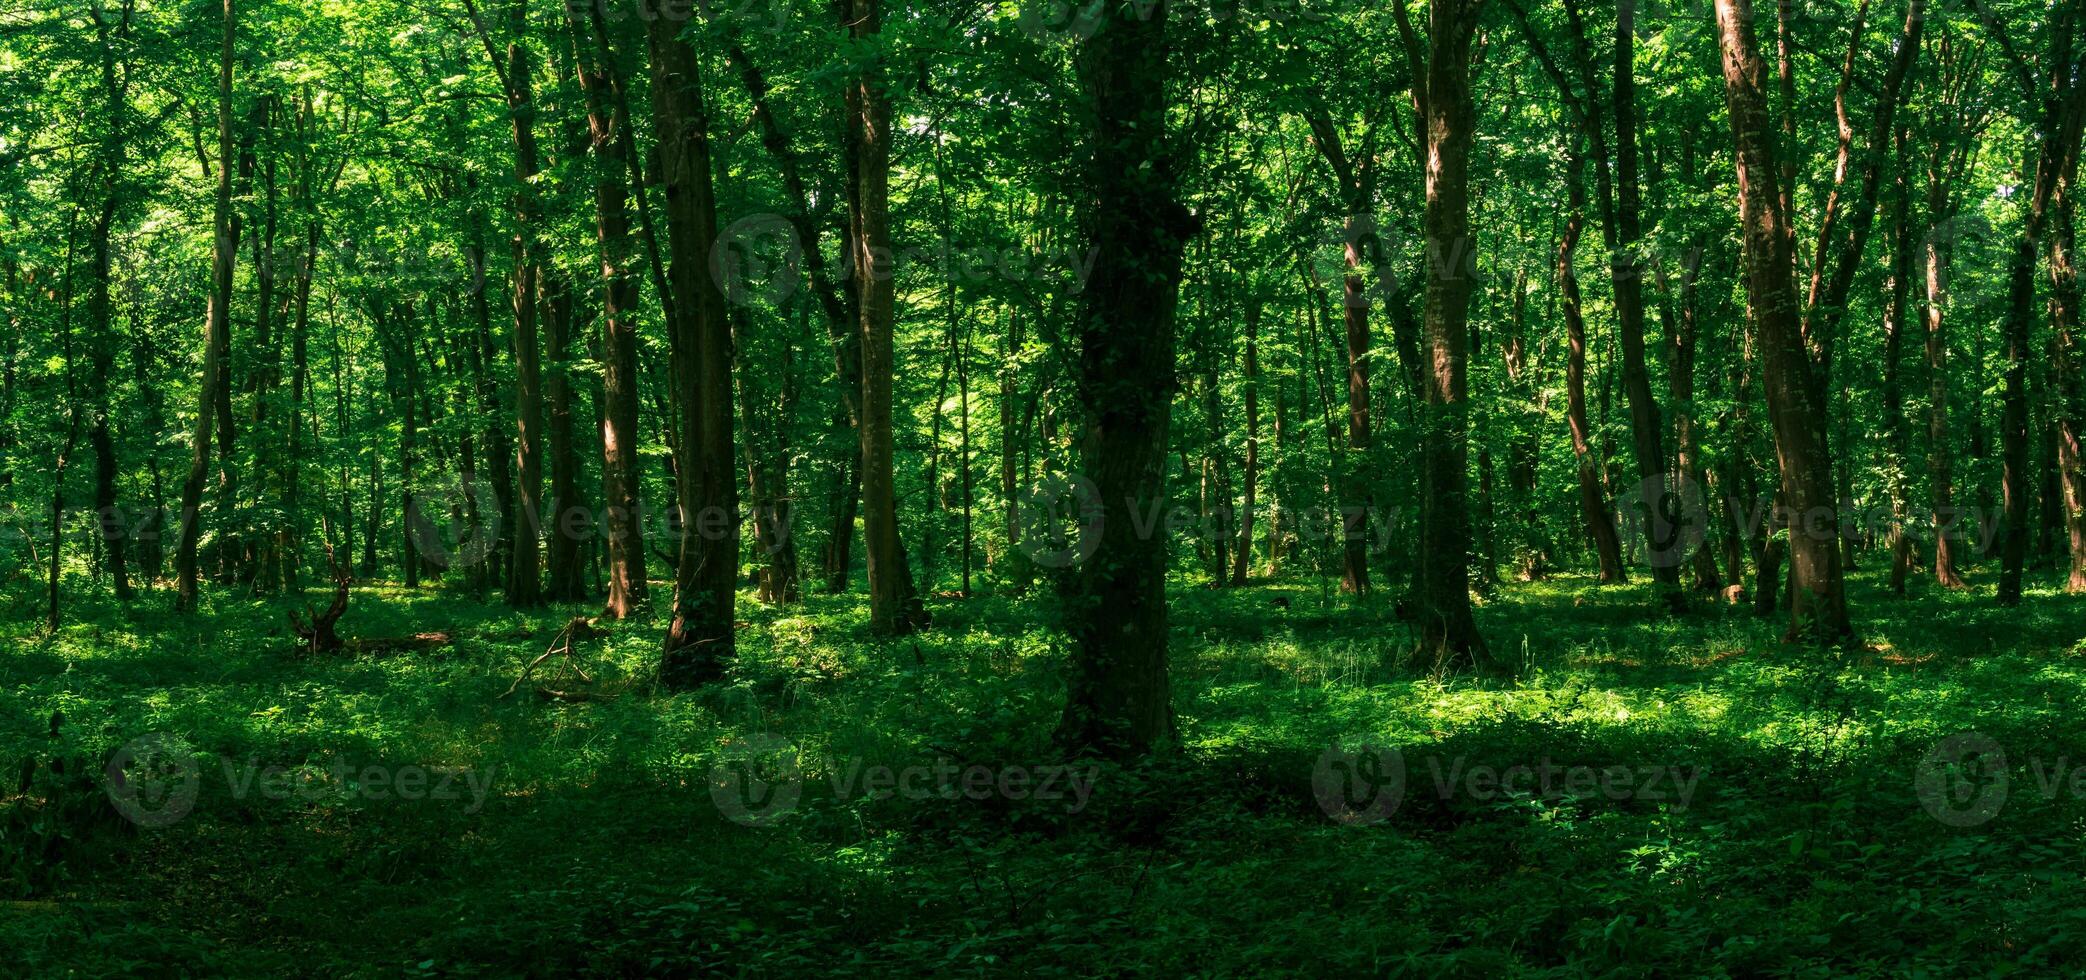 forest landscape, shady summer hornbeam grove with lush foliage on a sunny day photo